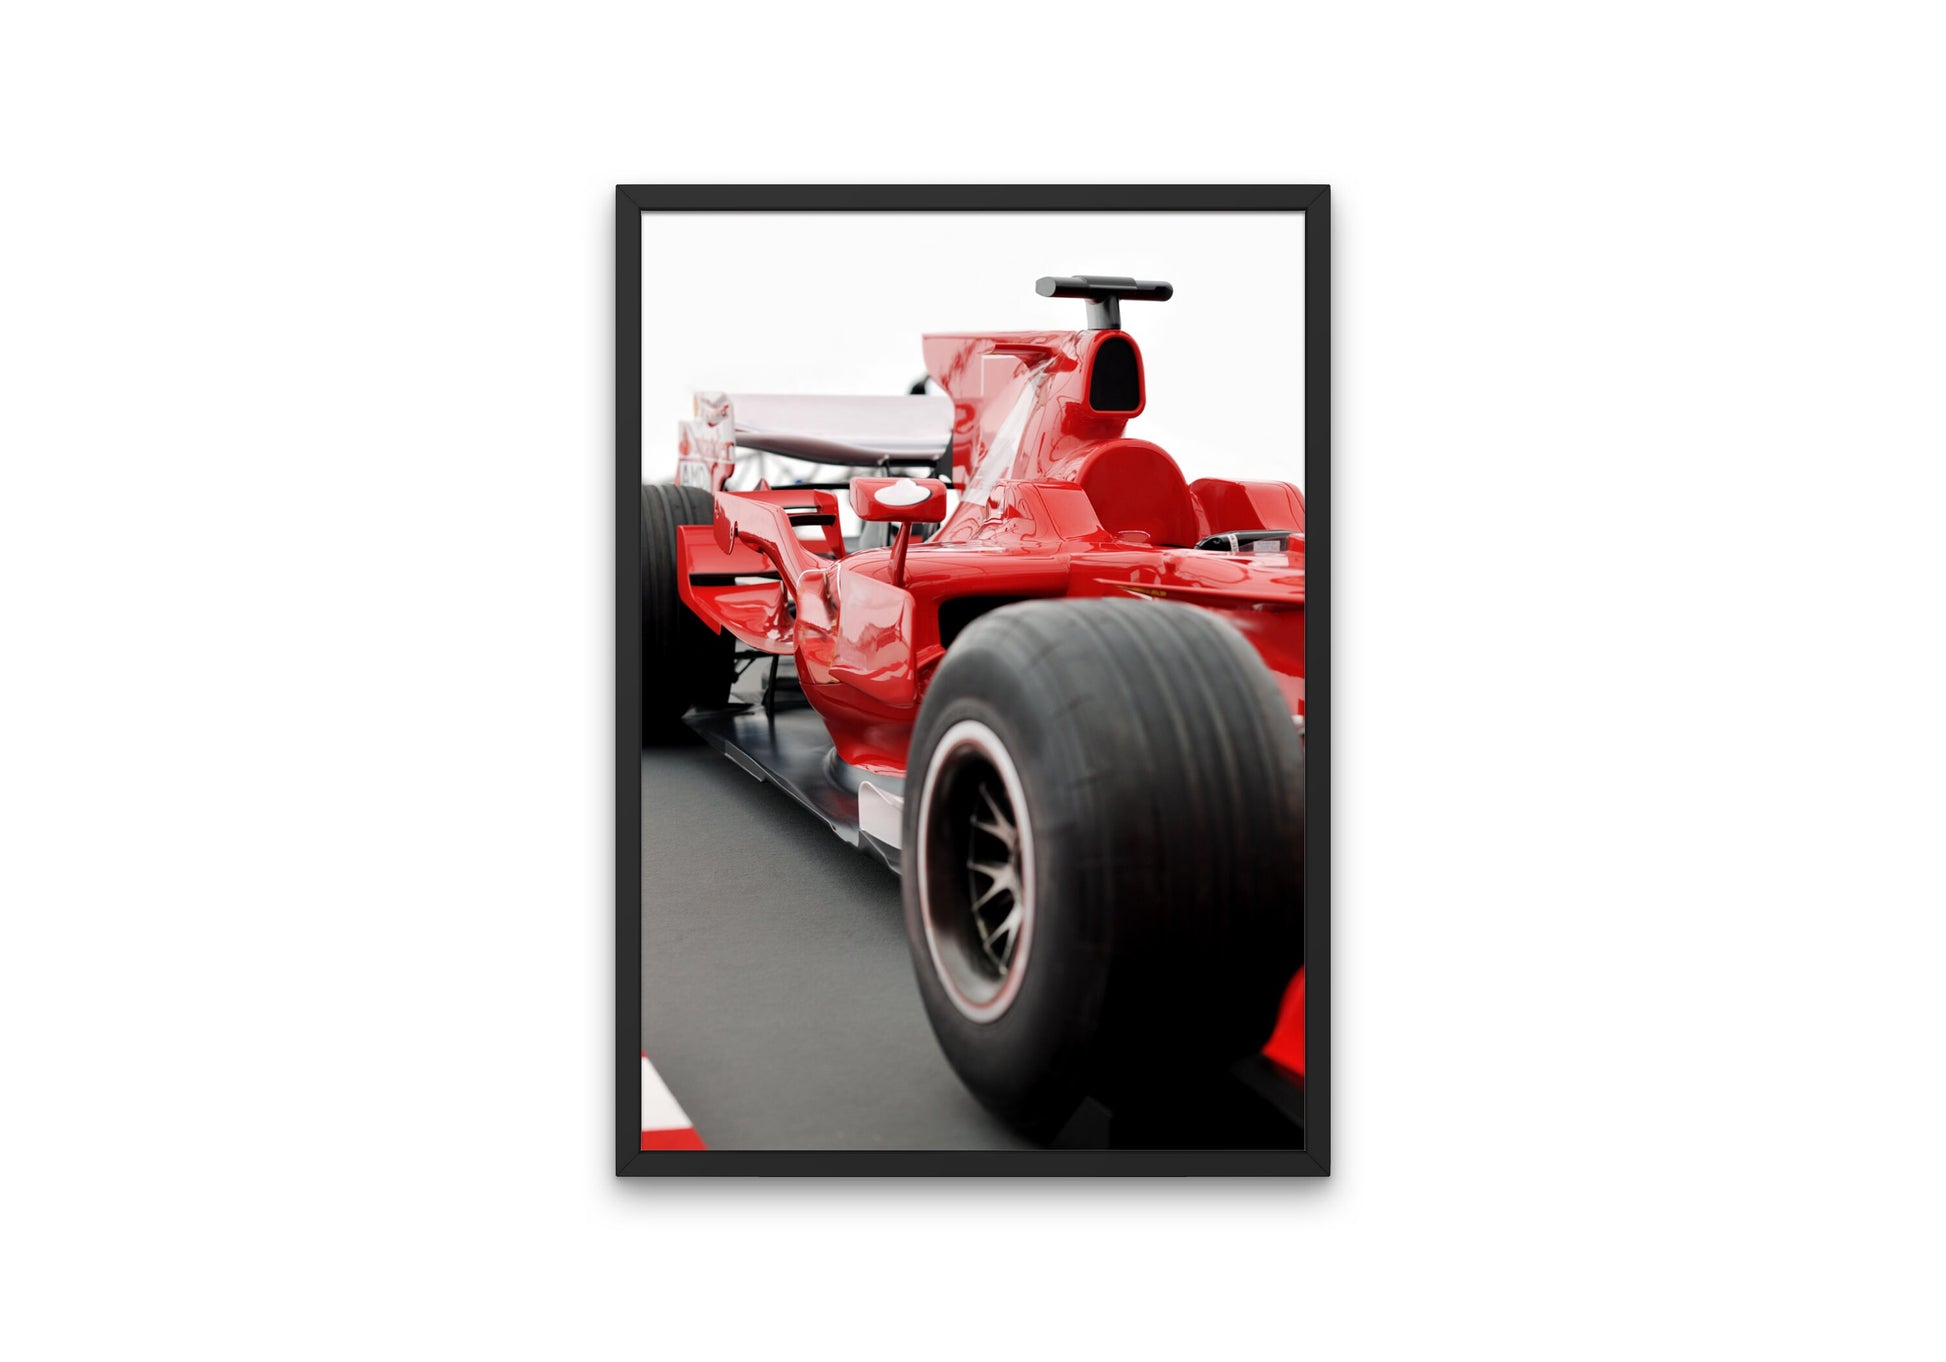 Formula 1 Race Car Poster INSTANT DOWNLOAD, Race Sports Car, Luxury Fashion Wall Art, Car Photo, Sport Automotive Décor, car enthusiast gift